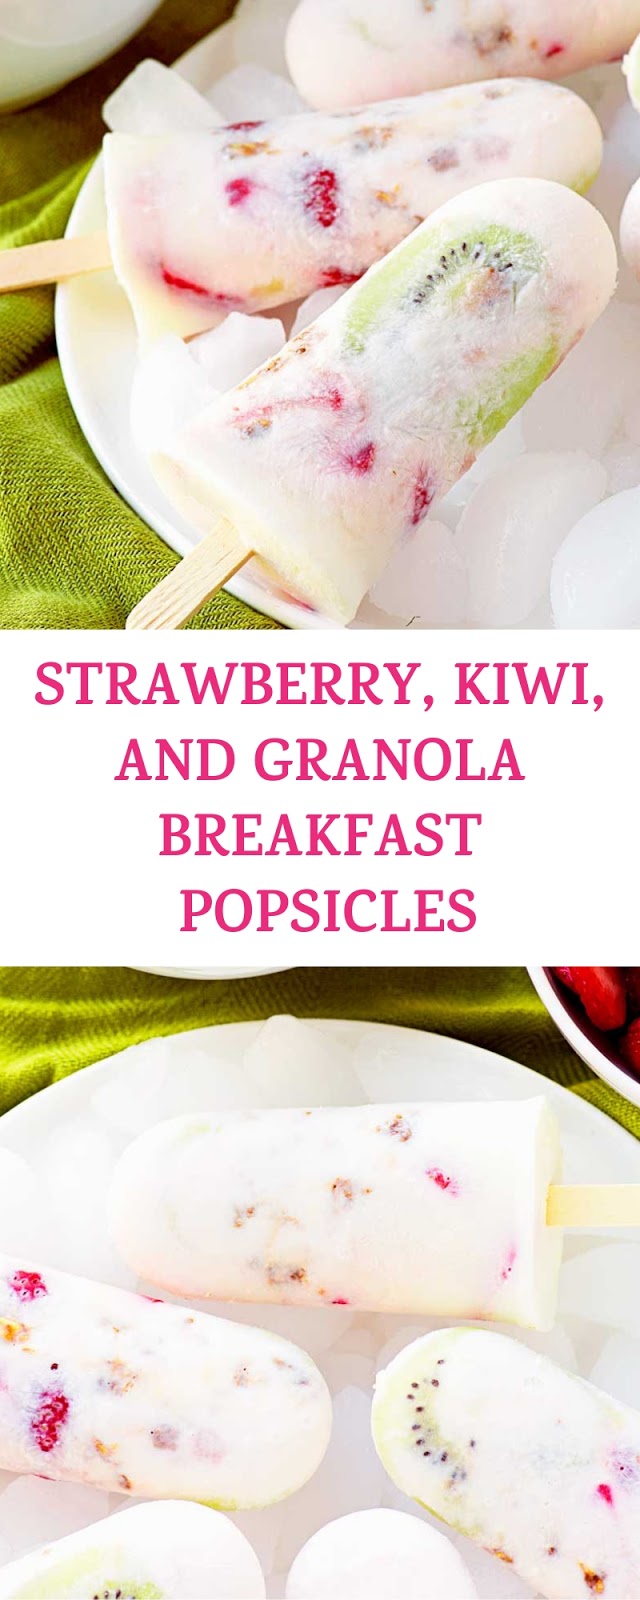 STRAWBERRY, KIWI, AND GRANOLA BREAKFAST POPSICLES